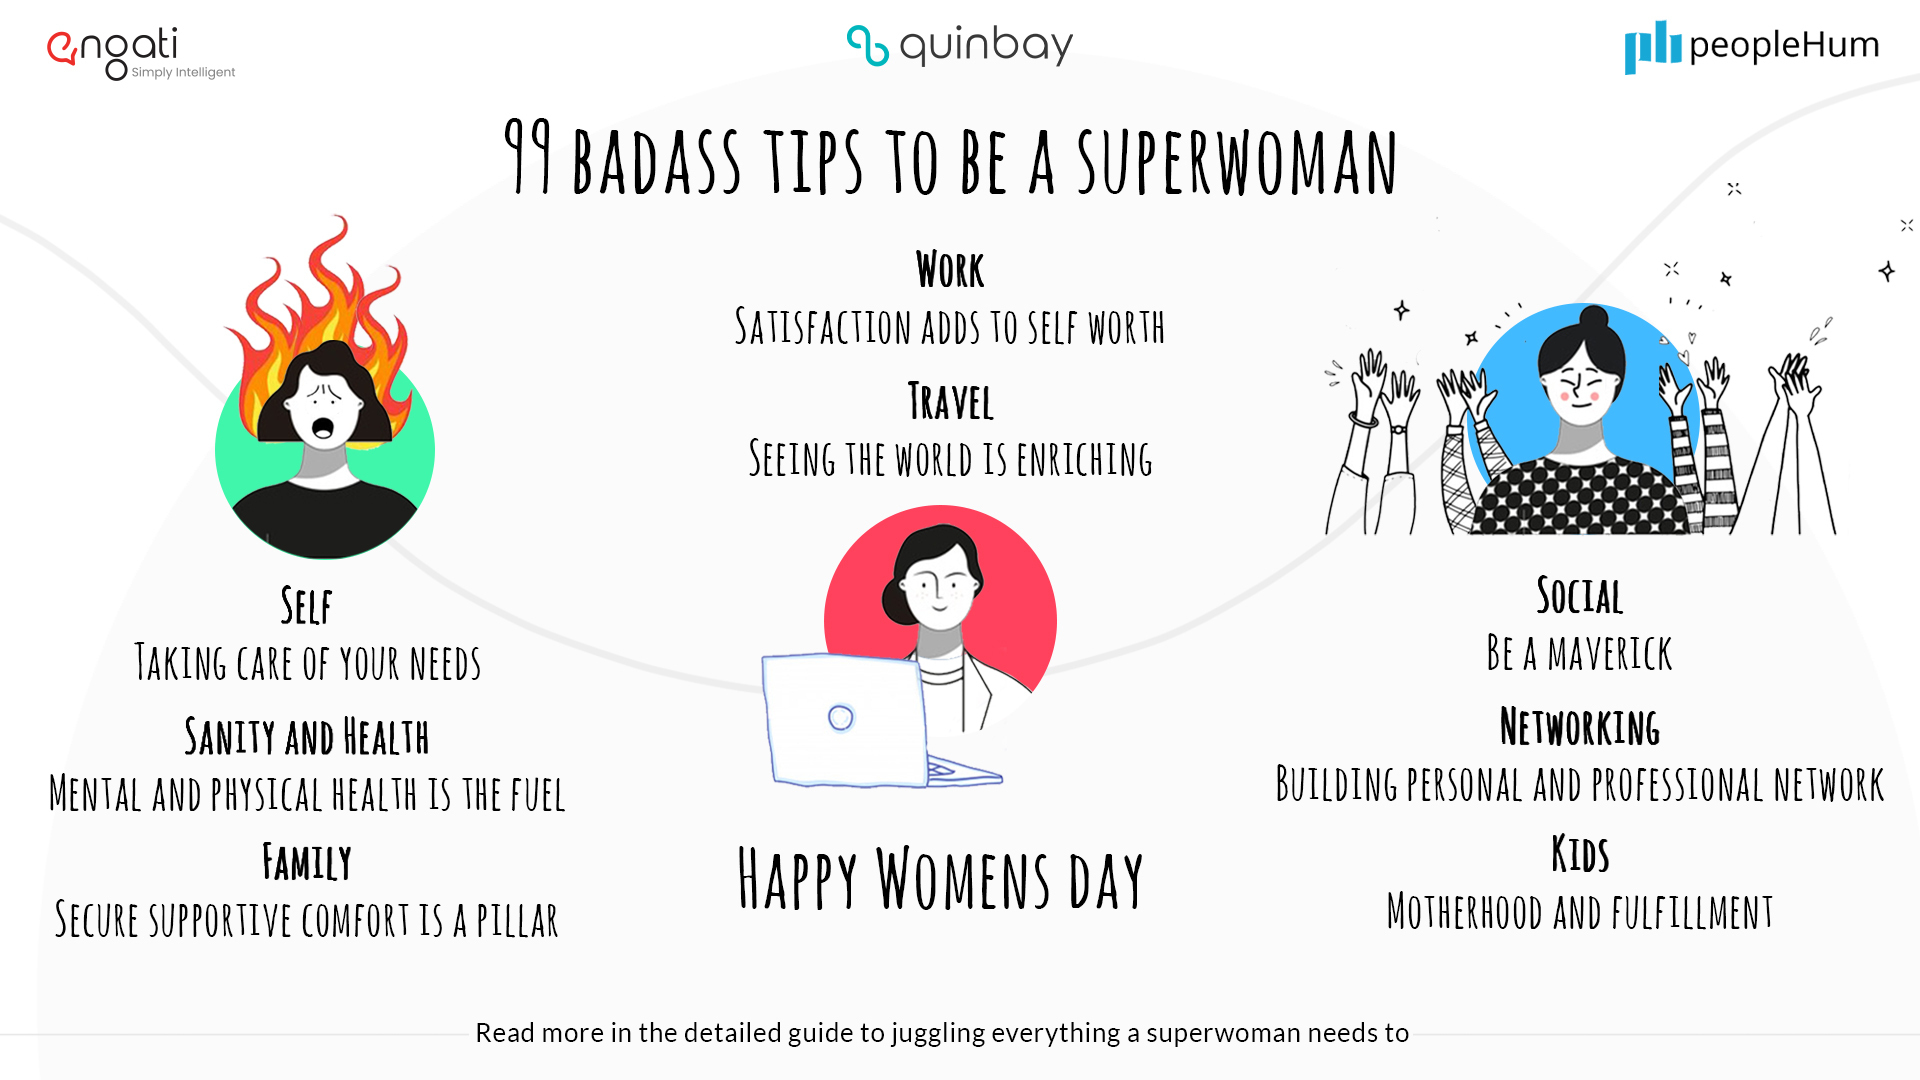 99 Badass tips to be a superwoman 